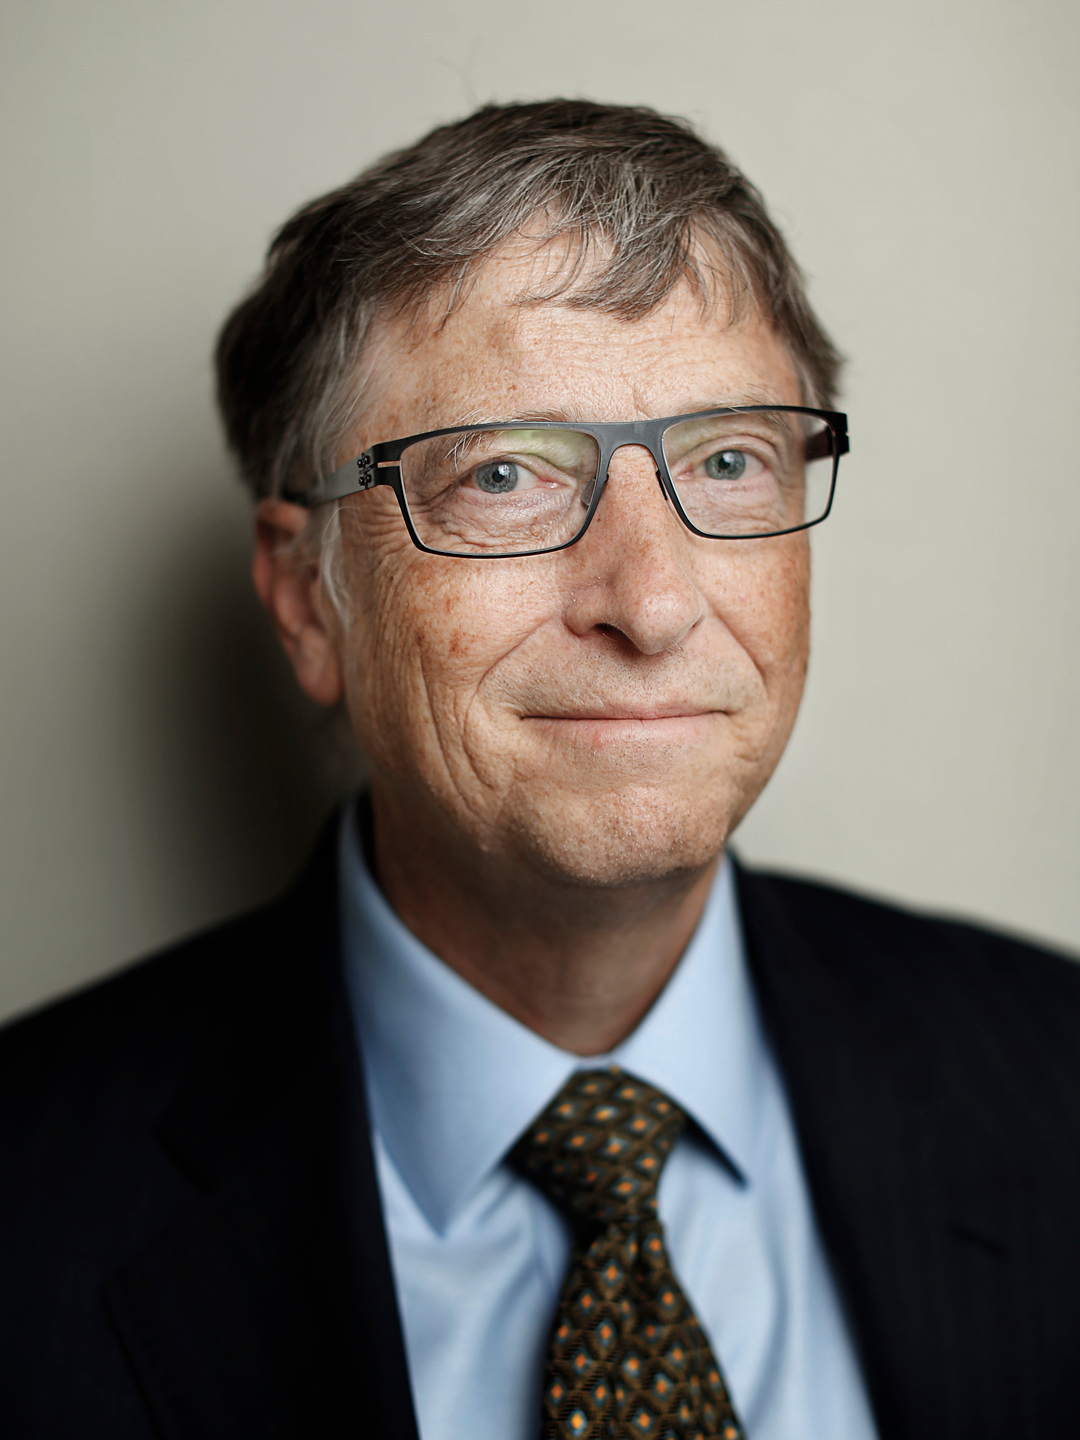 Bill Gates early career